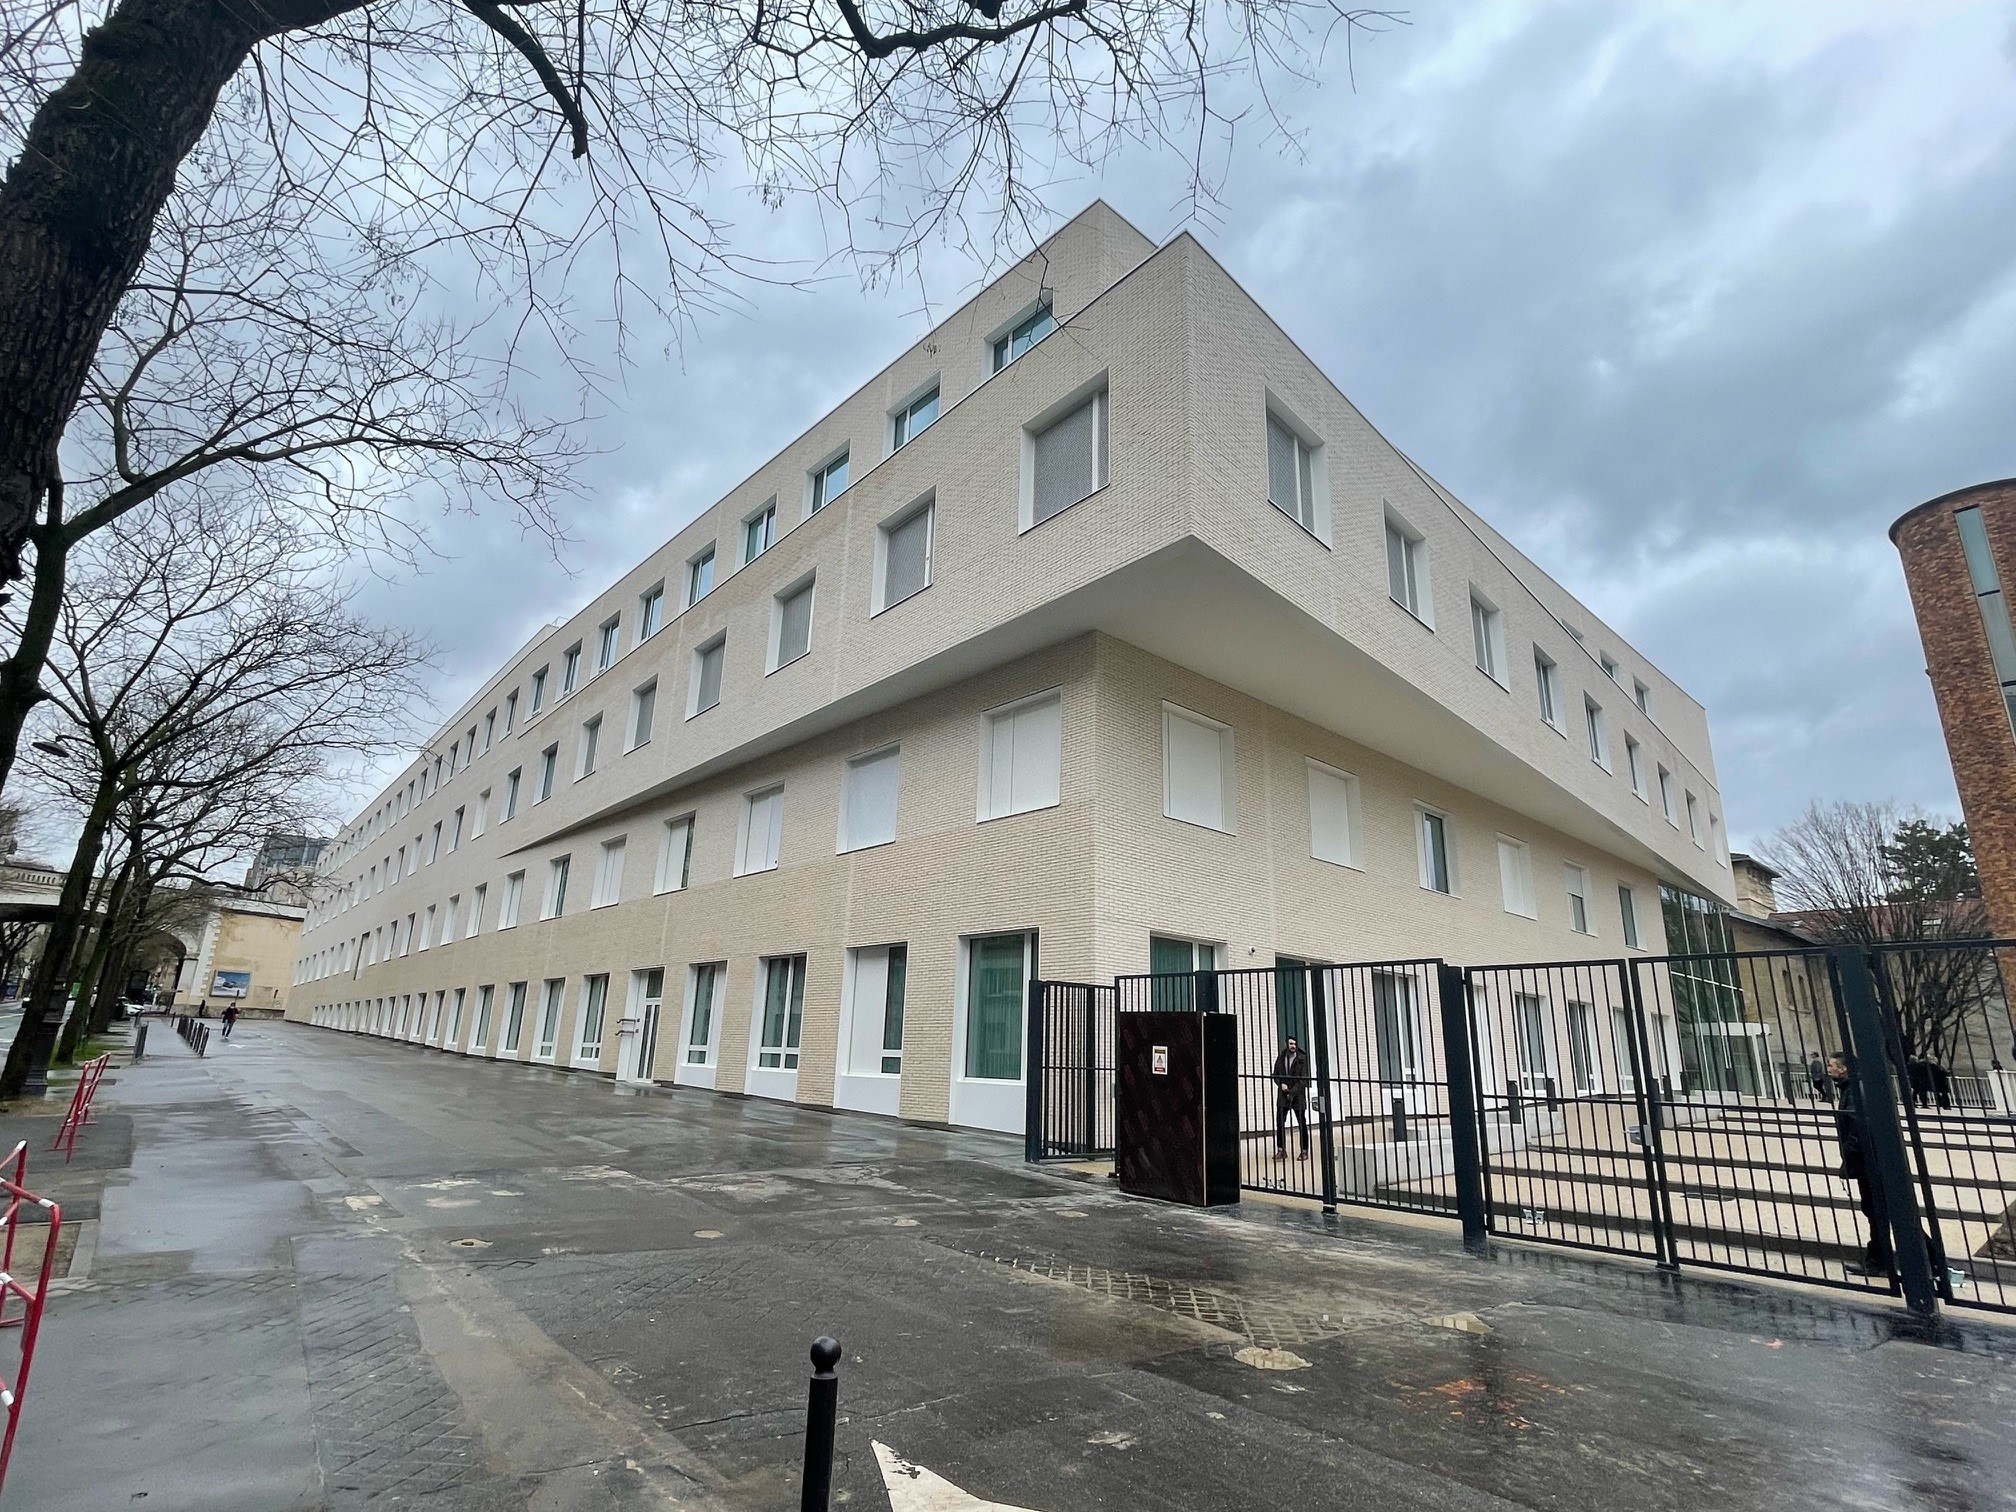 Inauguration du bâtiment « Neuro Sainte-Anne » du GHU Paris psychiatrie & neurosciences.